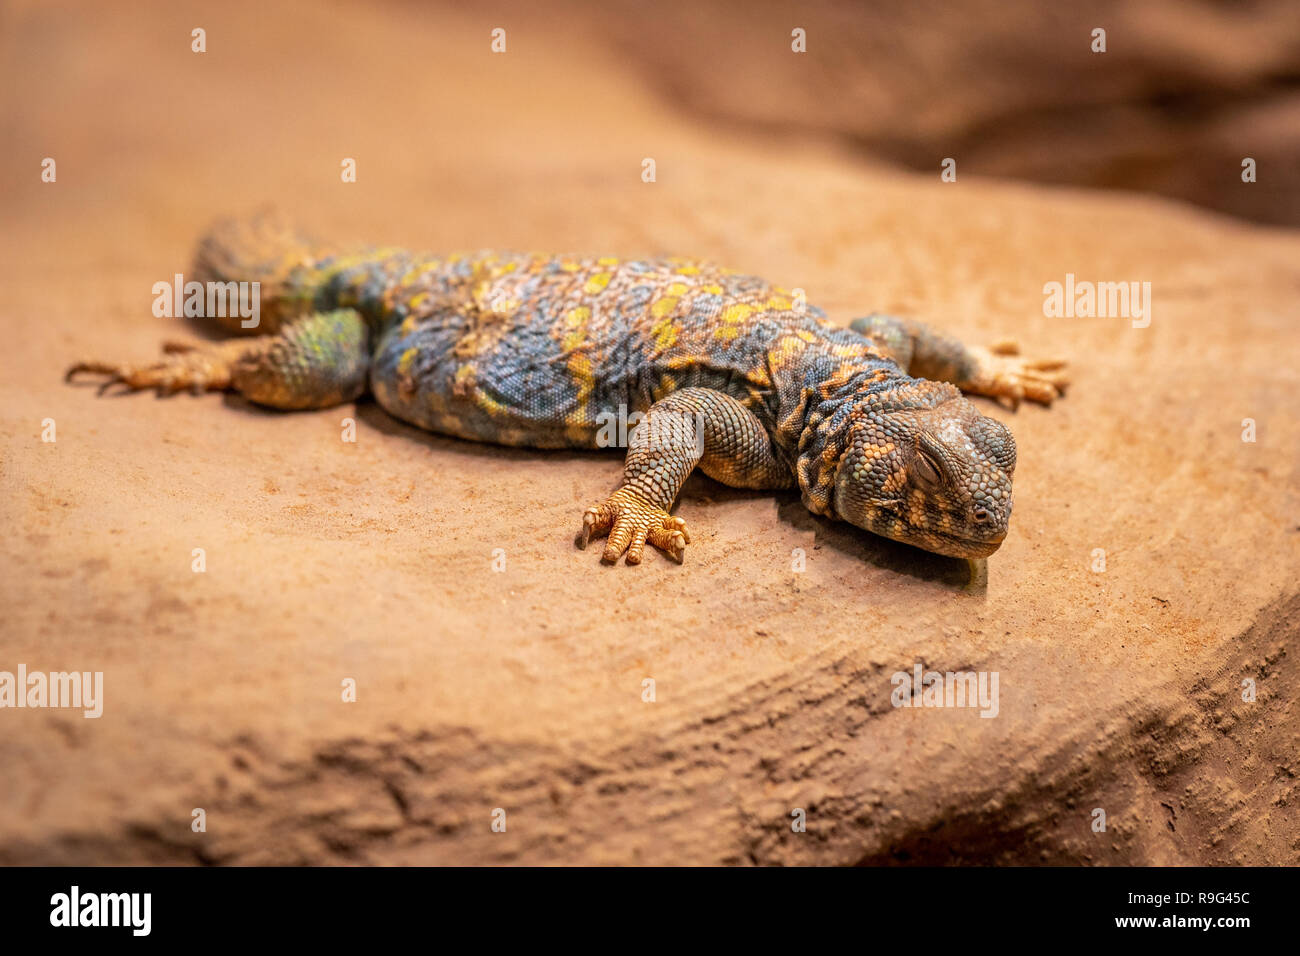 Ornate spiny tailed lizard, Uromastyx ornata, resting on a rock Stock Photo